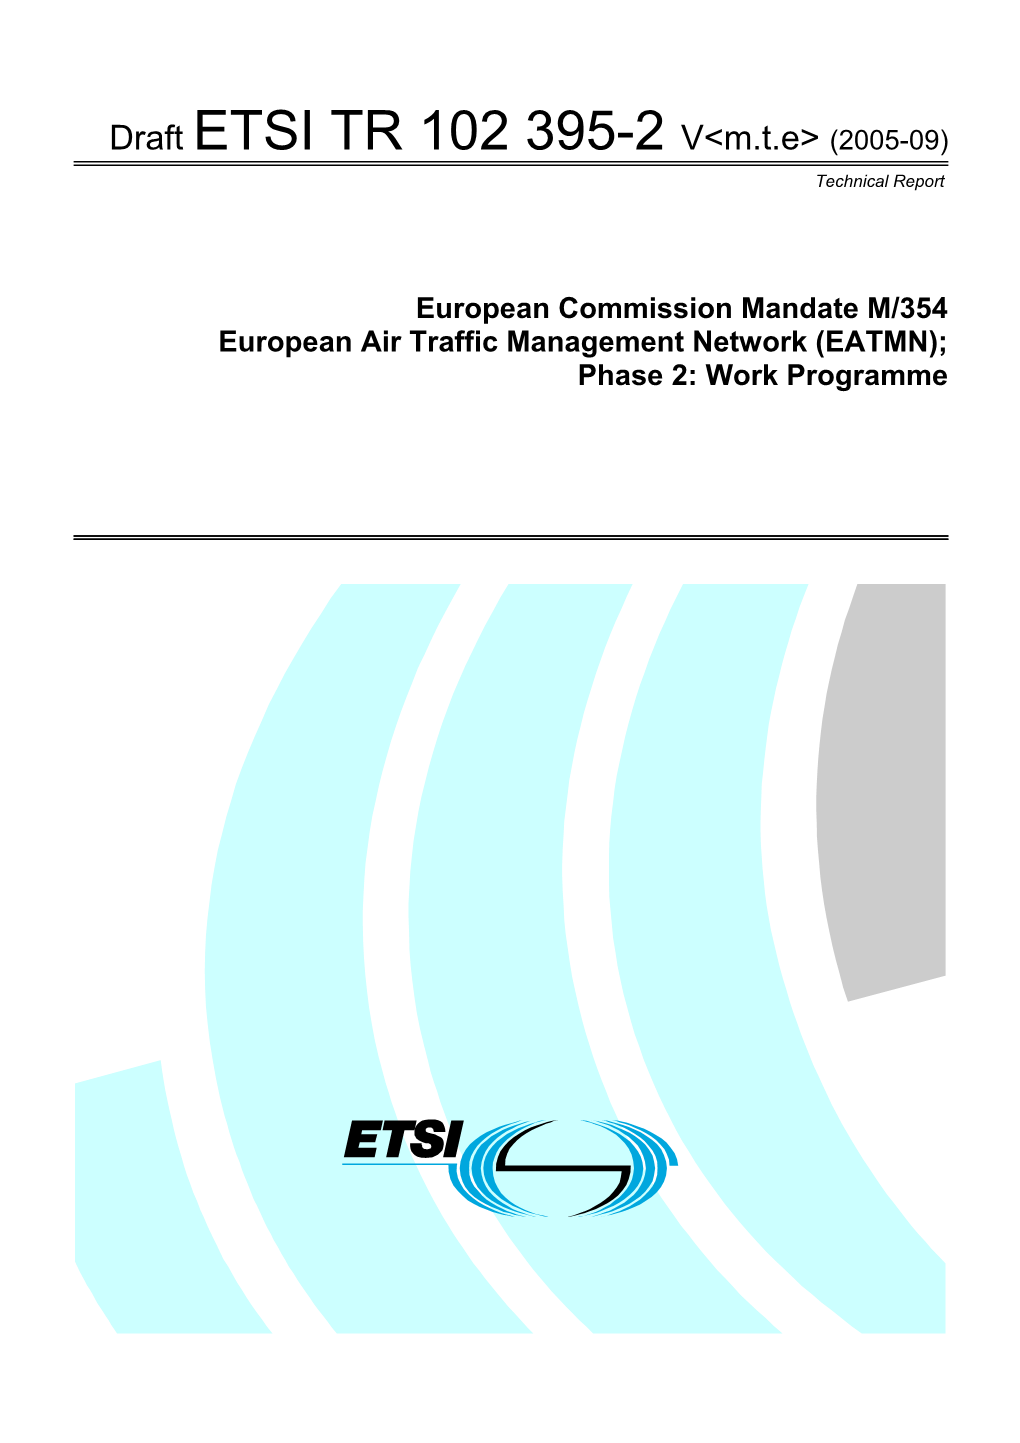 European Air Traffic Management Network (EATMN);